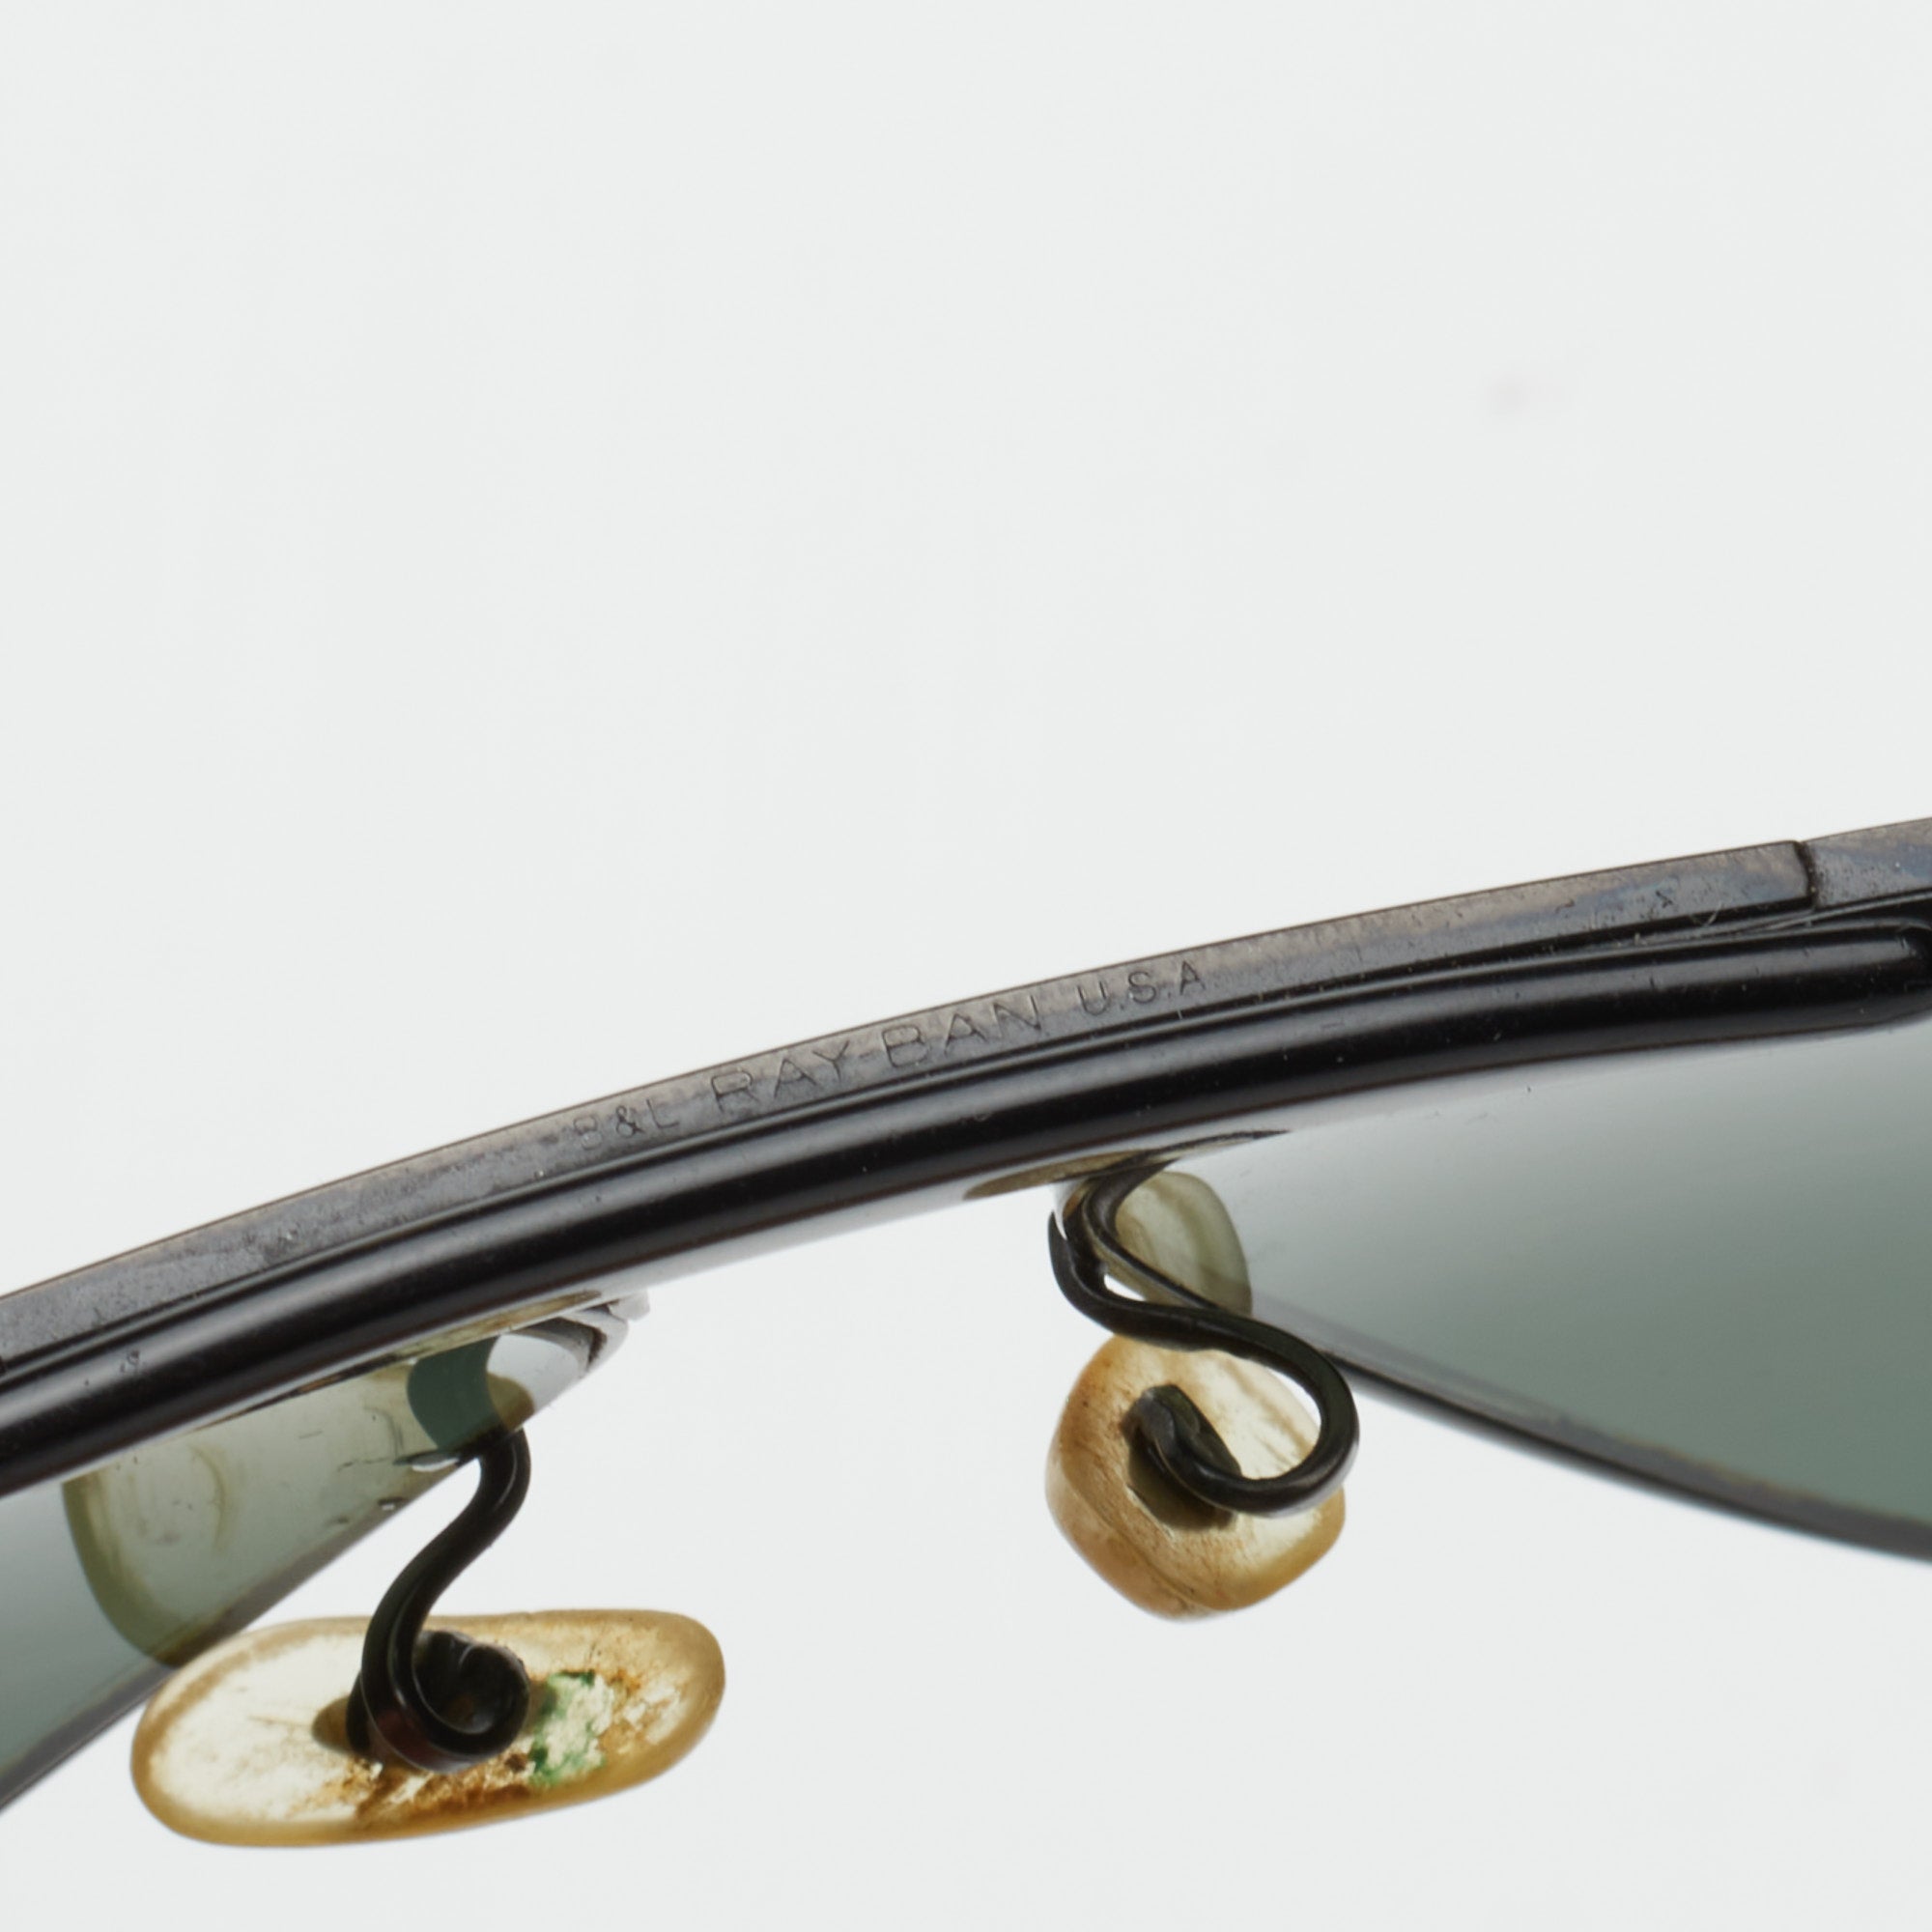 Vintage B&L RAY BAN "Outdoorsman" Black Frame COBRA Sunglasses 58mm